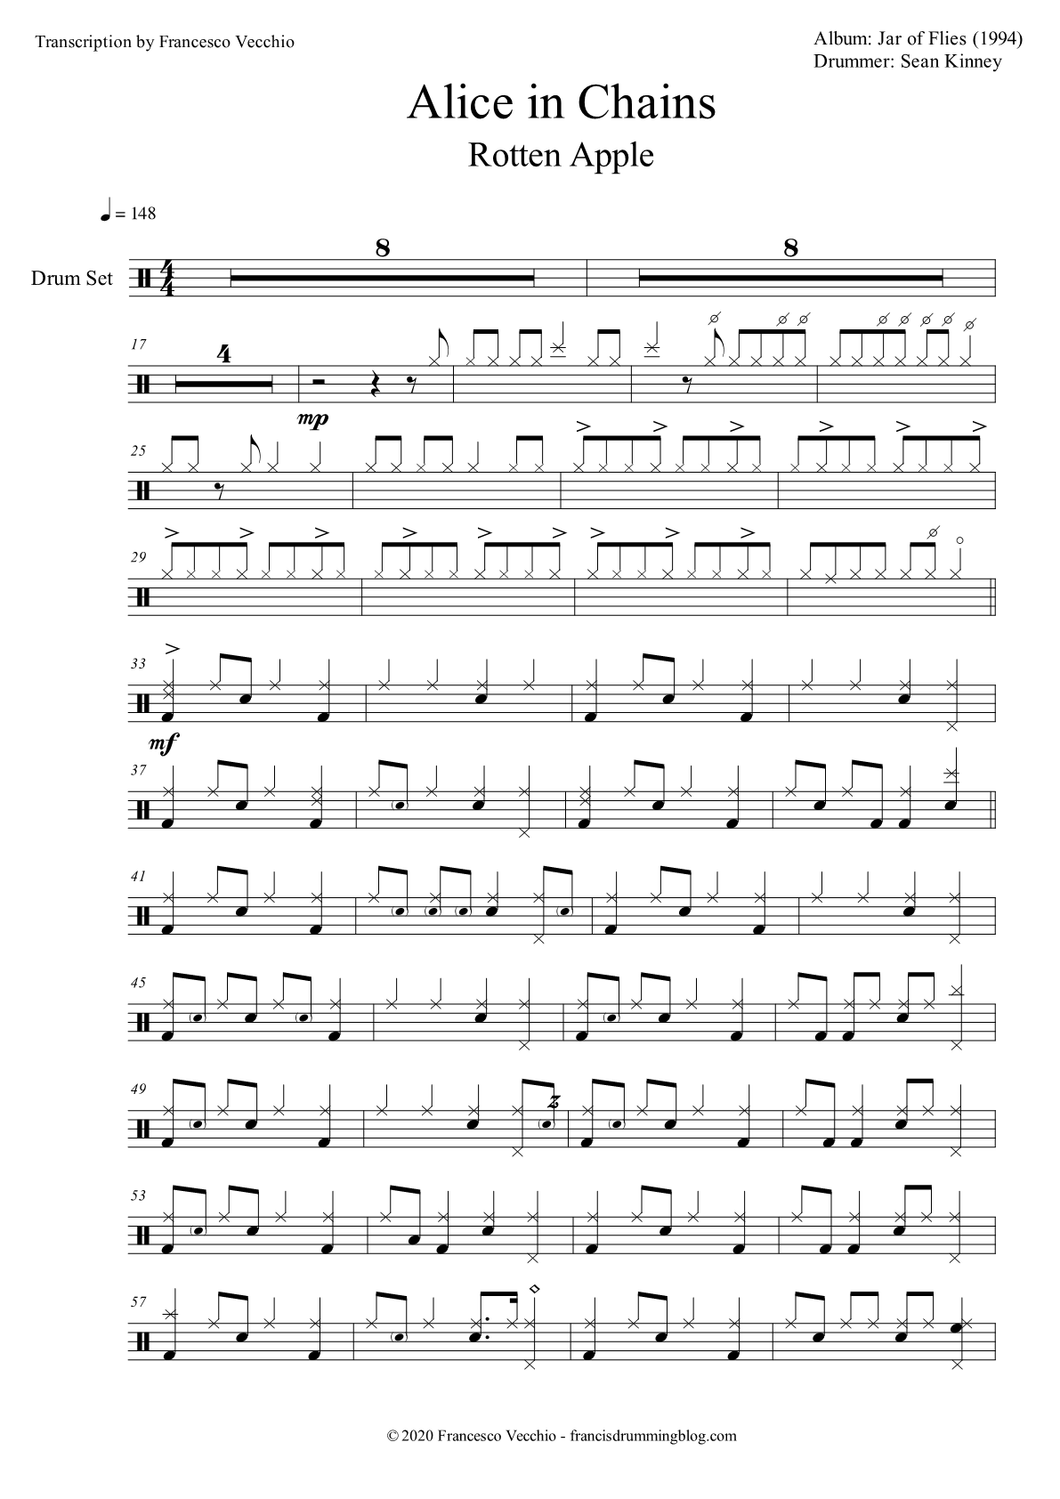 Rotten Apple - Alice in Chains - Full Drum Transcription / Drum Sheet Music - FrancisDrummingBlog.com